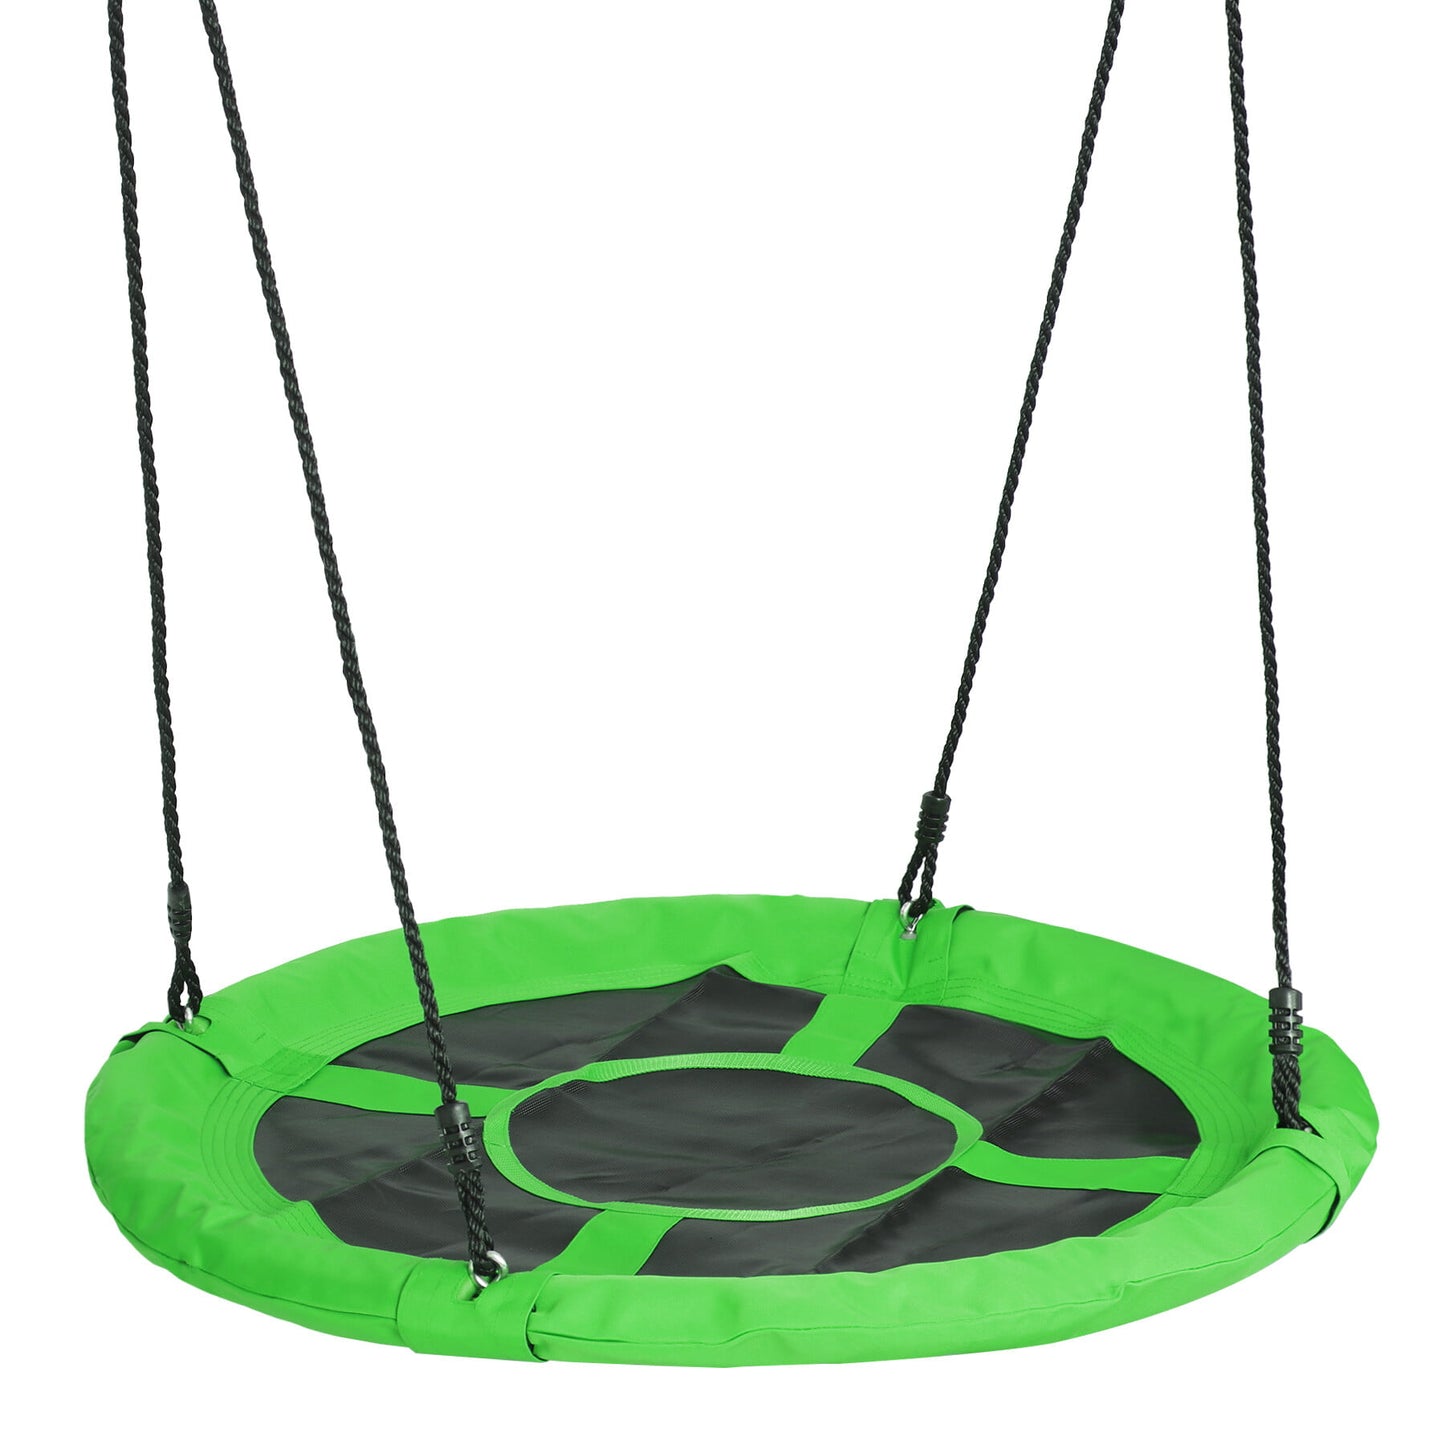 ZENY 40" Tree Swing Spider Saucer Freestanding Steel 73" H Swing Stand, Green